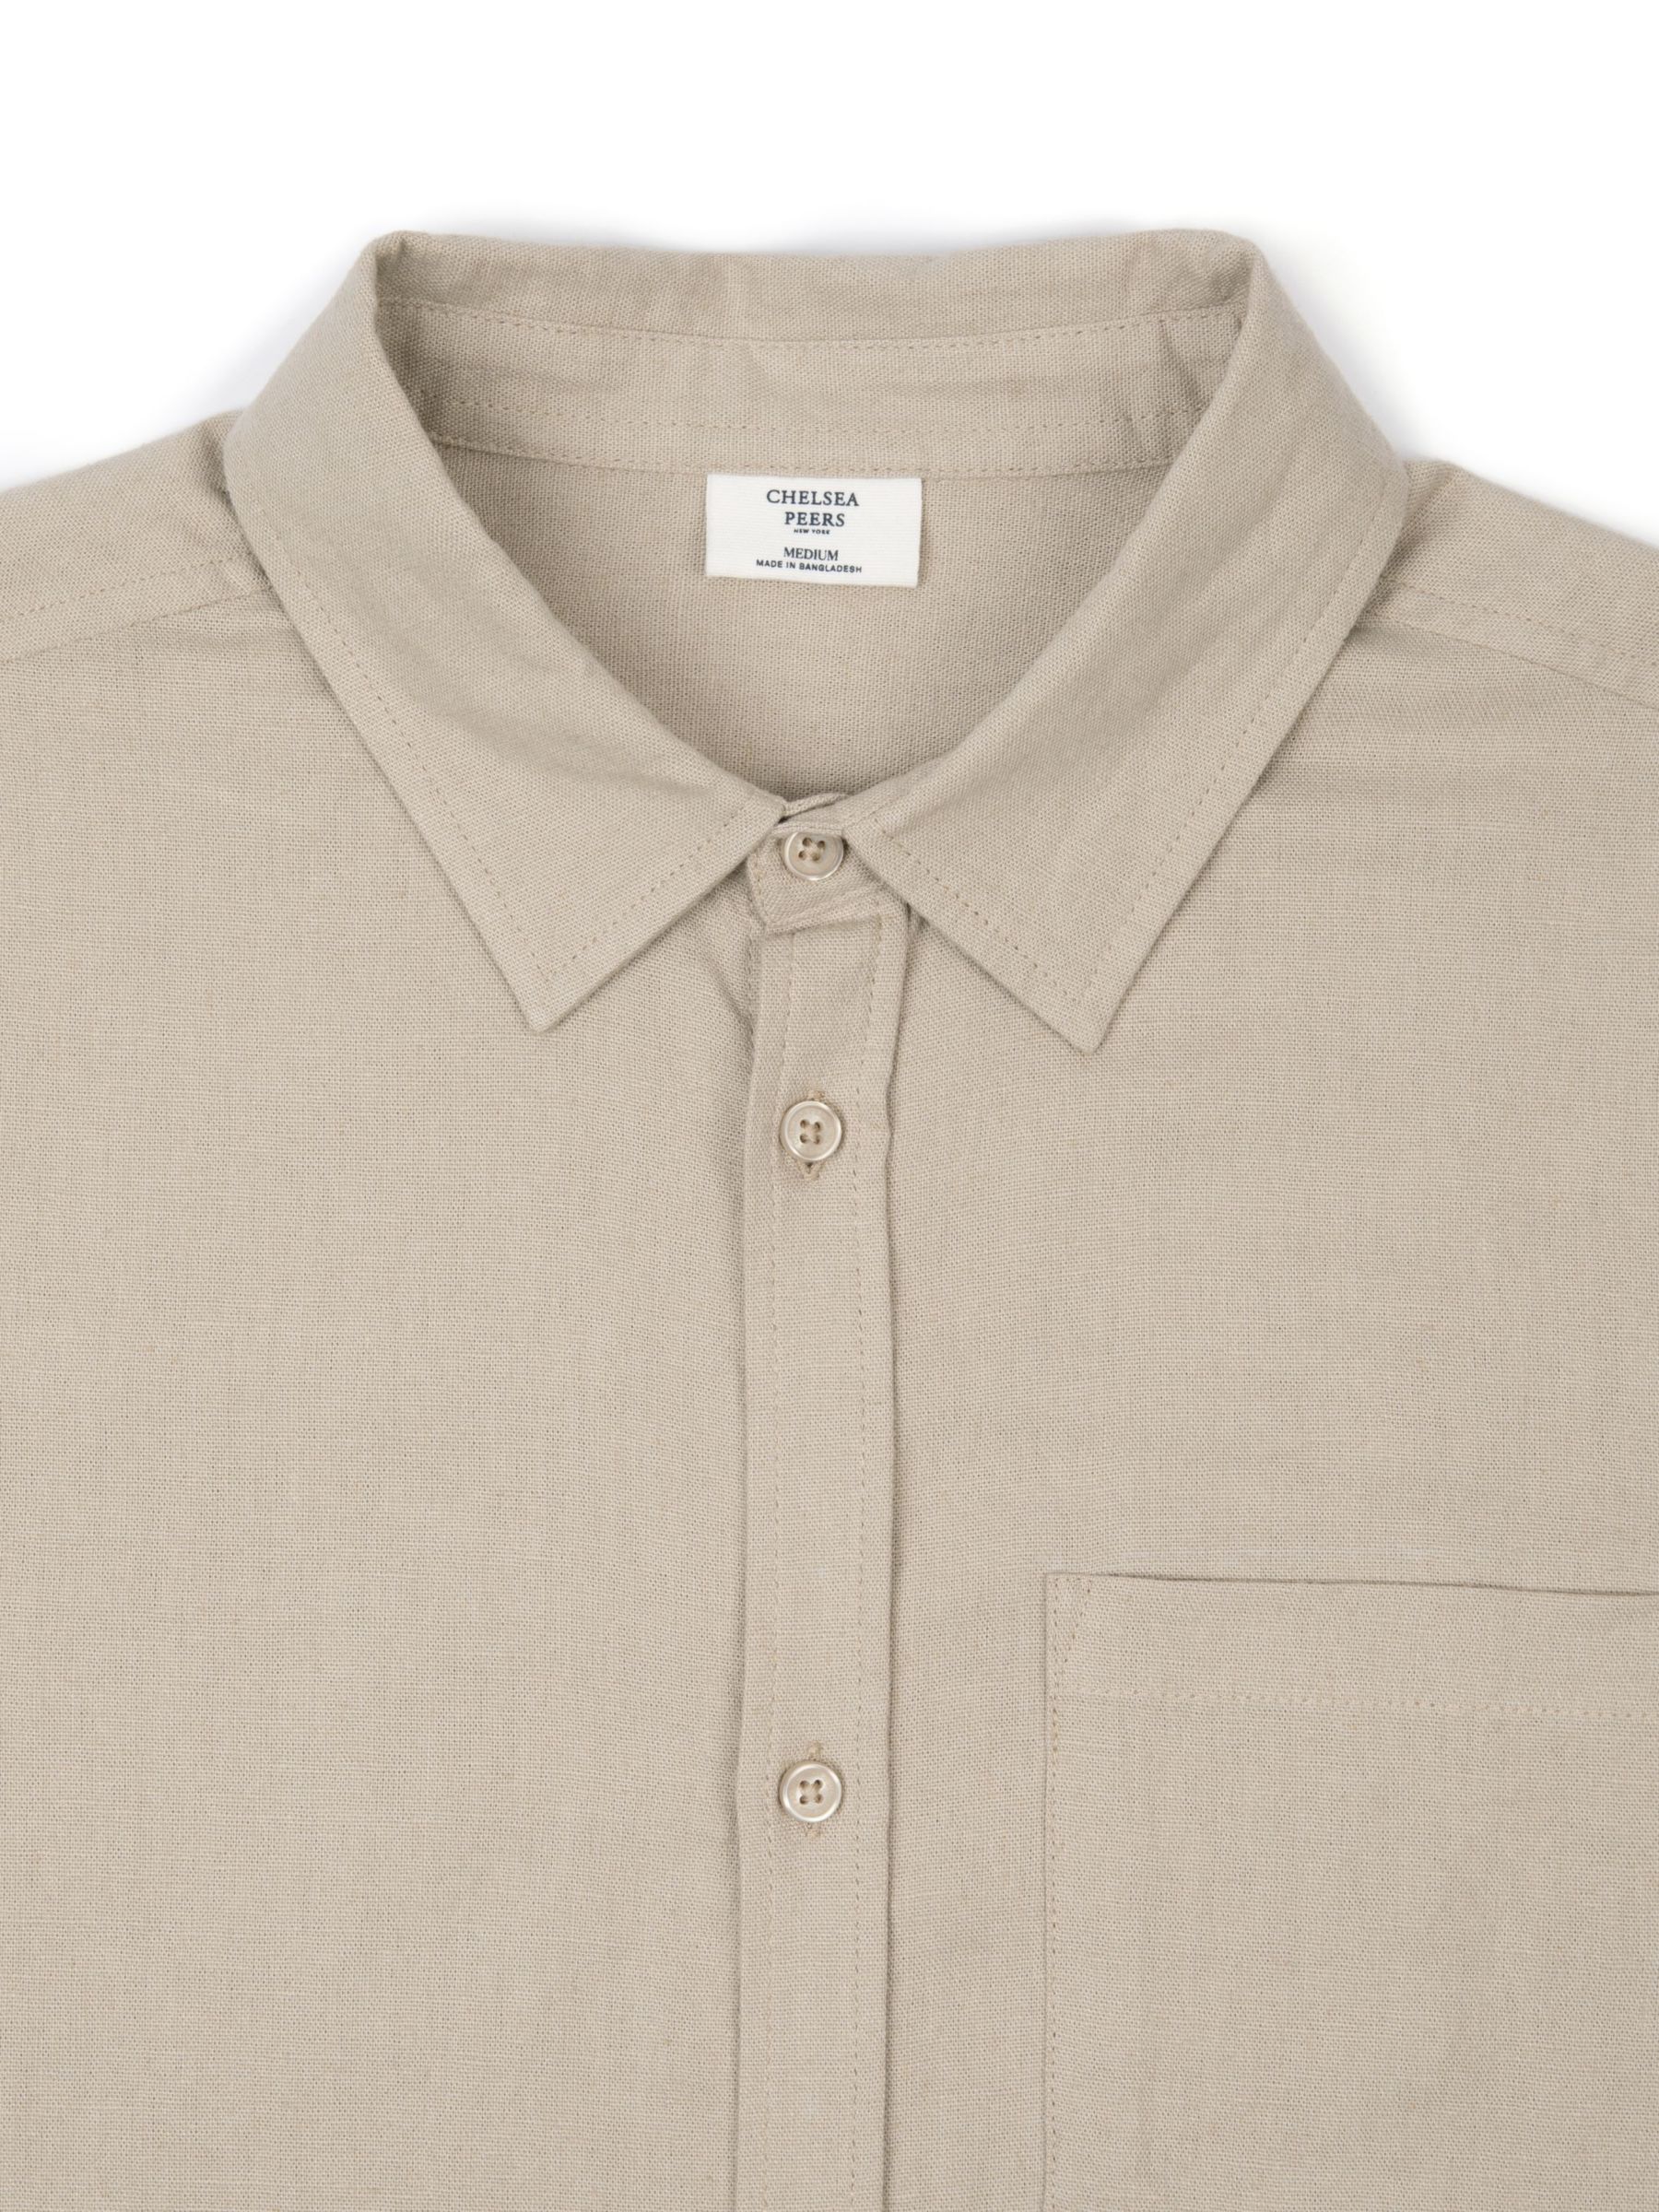 Chelsea Peers Linen Blend Long Sleeve Shirt, Camel, S